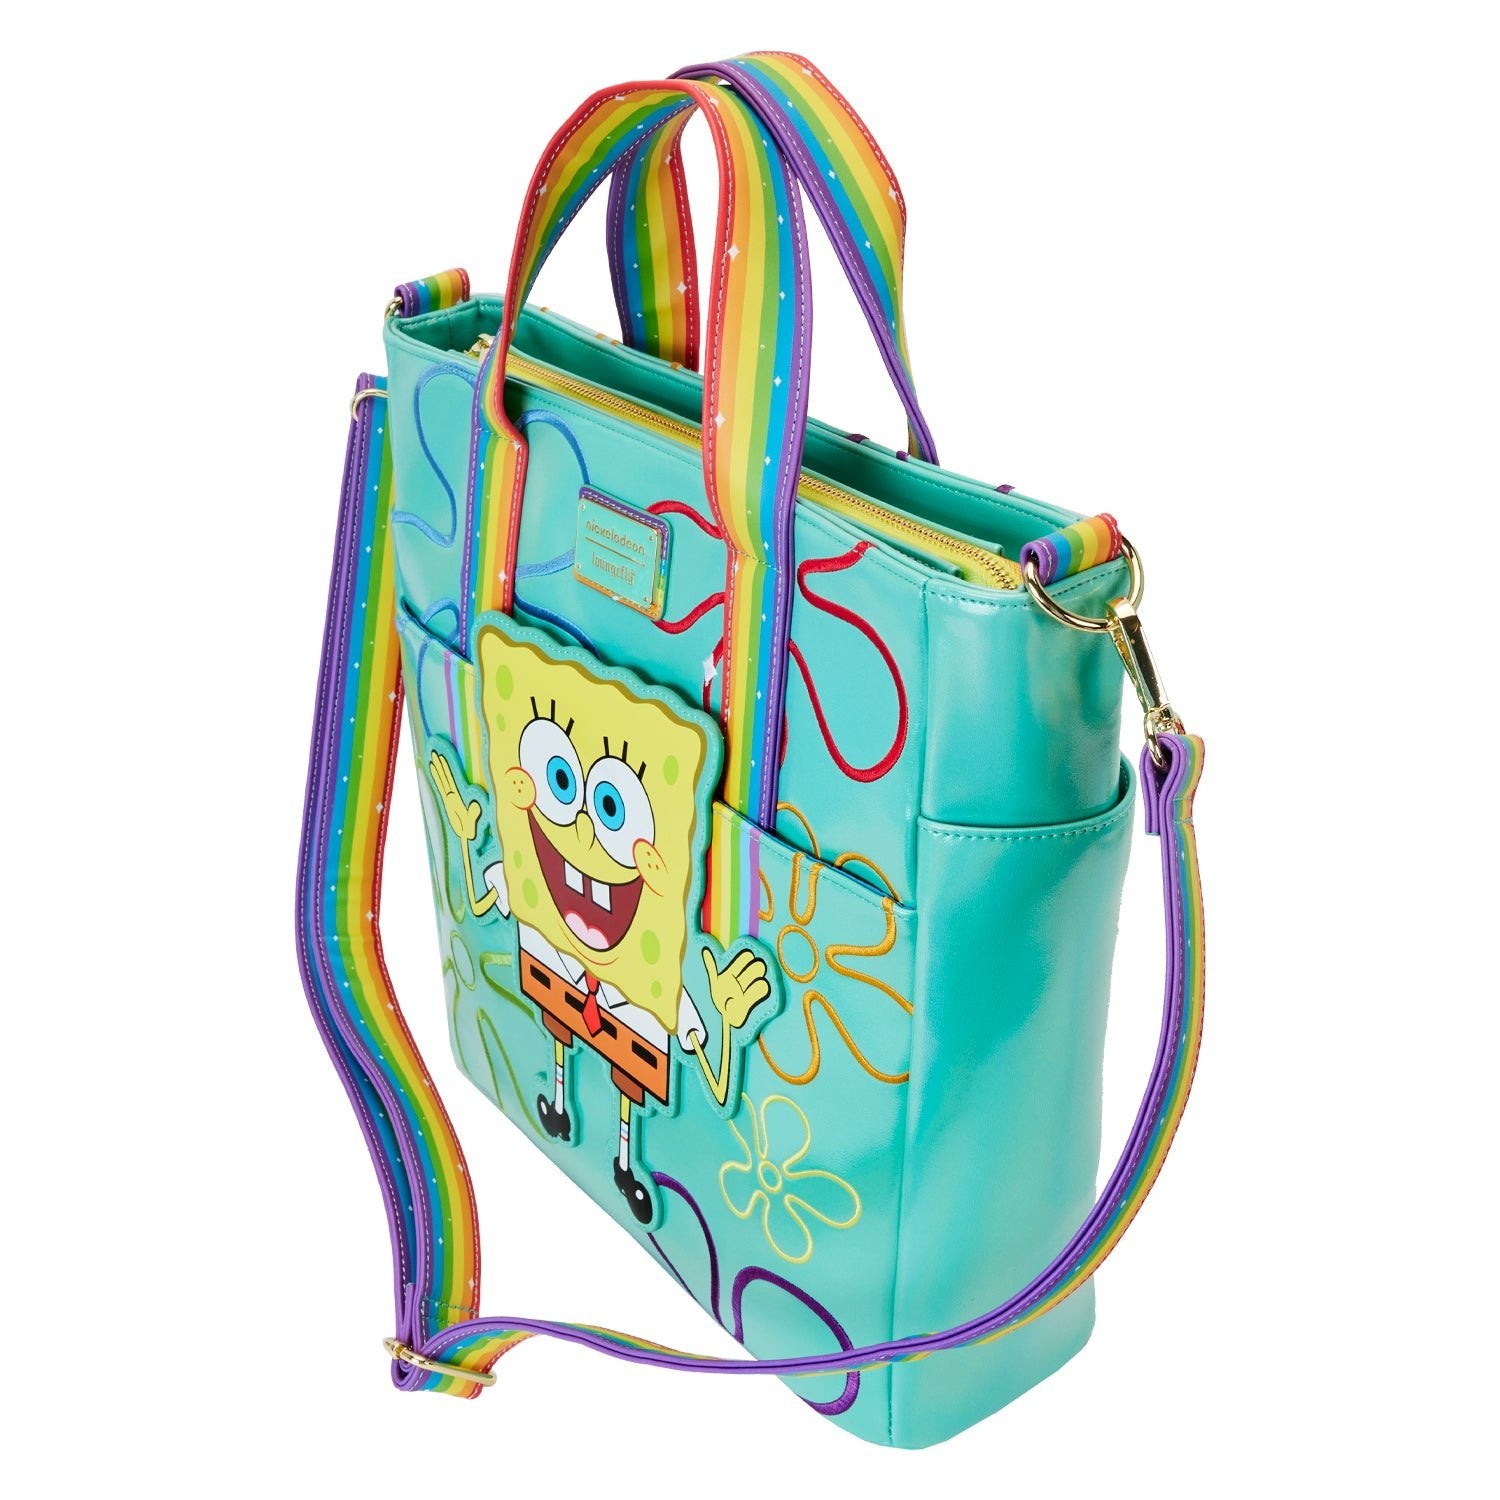 Loungefly x Nickelodeon SpongeBob SquarePants Imagination Convertible Tote Bag - GeekCore